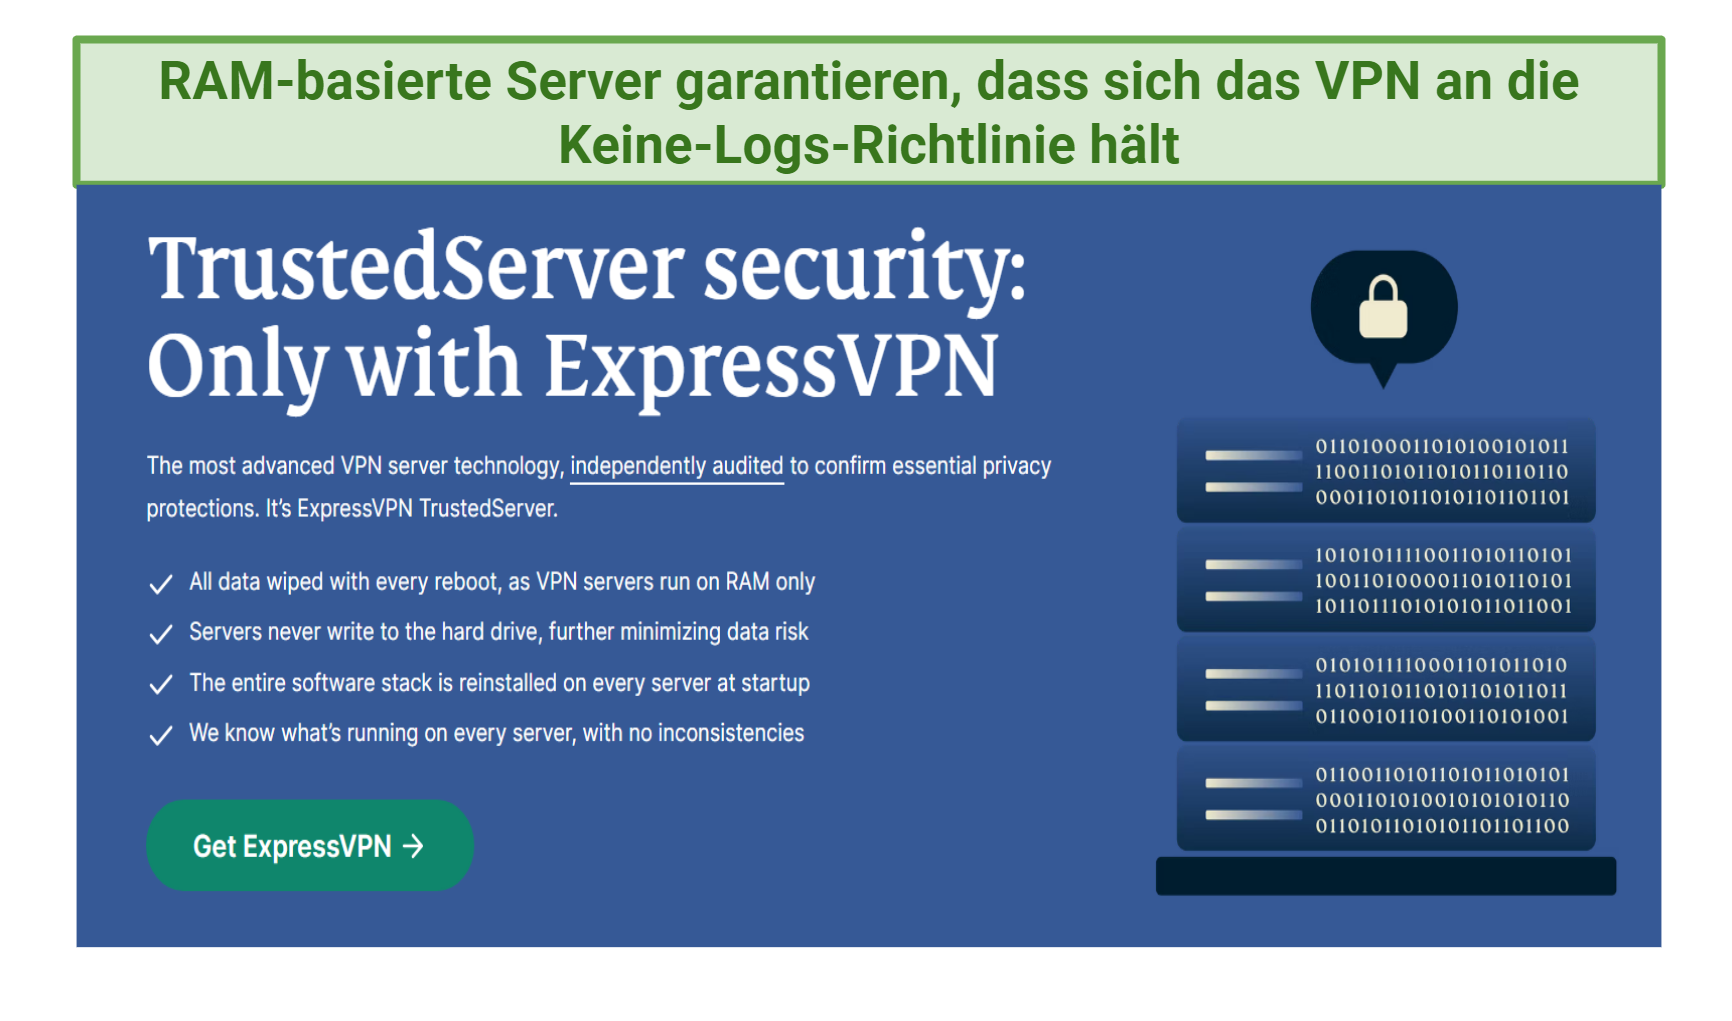 screenshot highlighting the features of ExpressVPN's TrustedServer technology